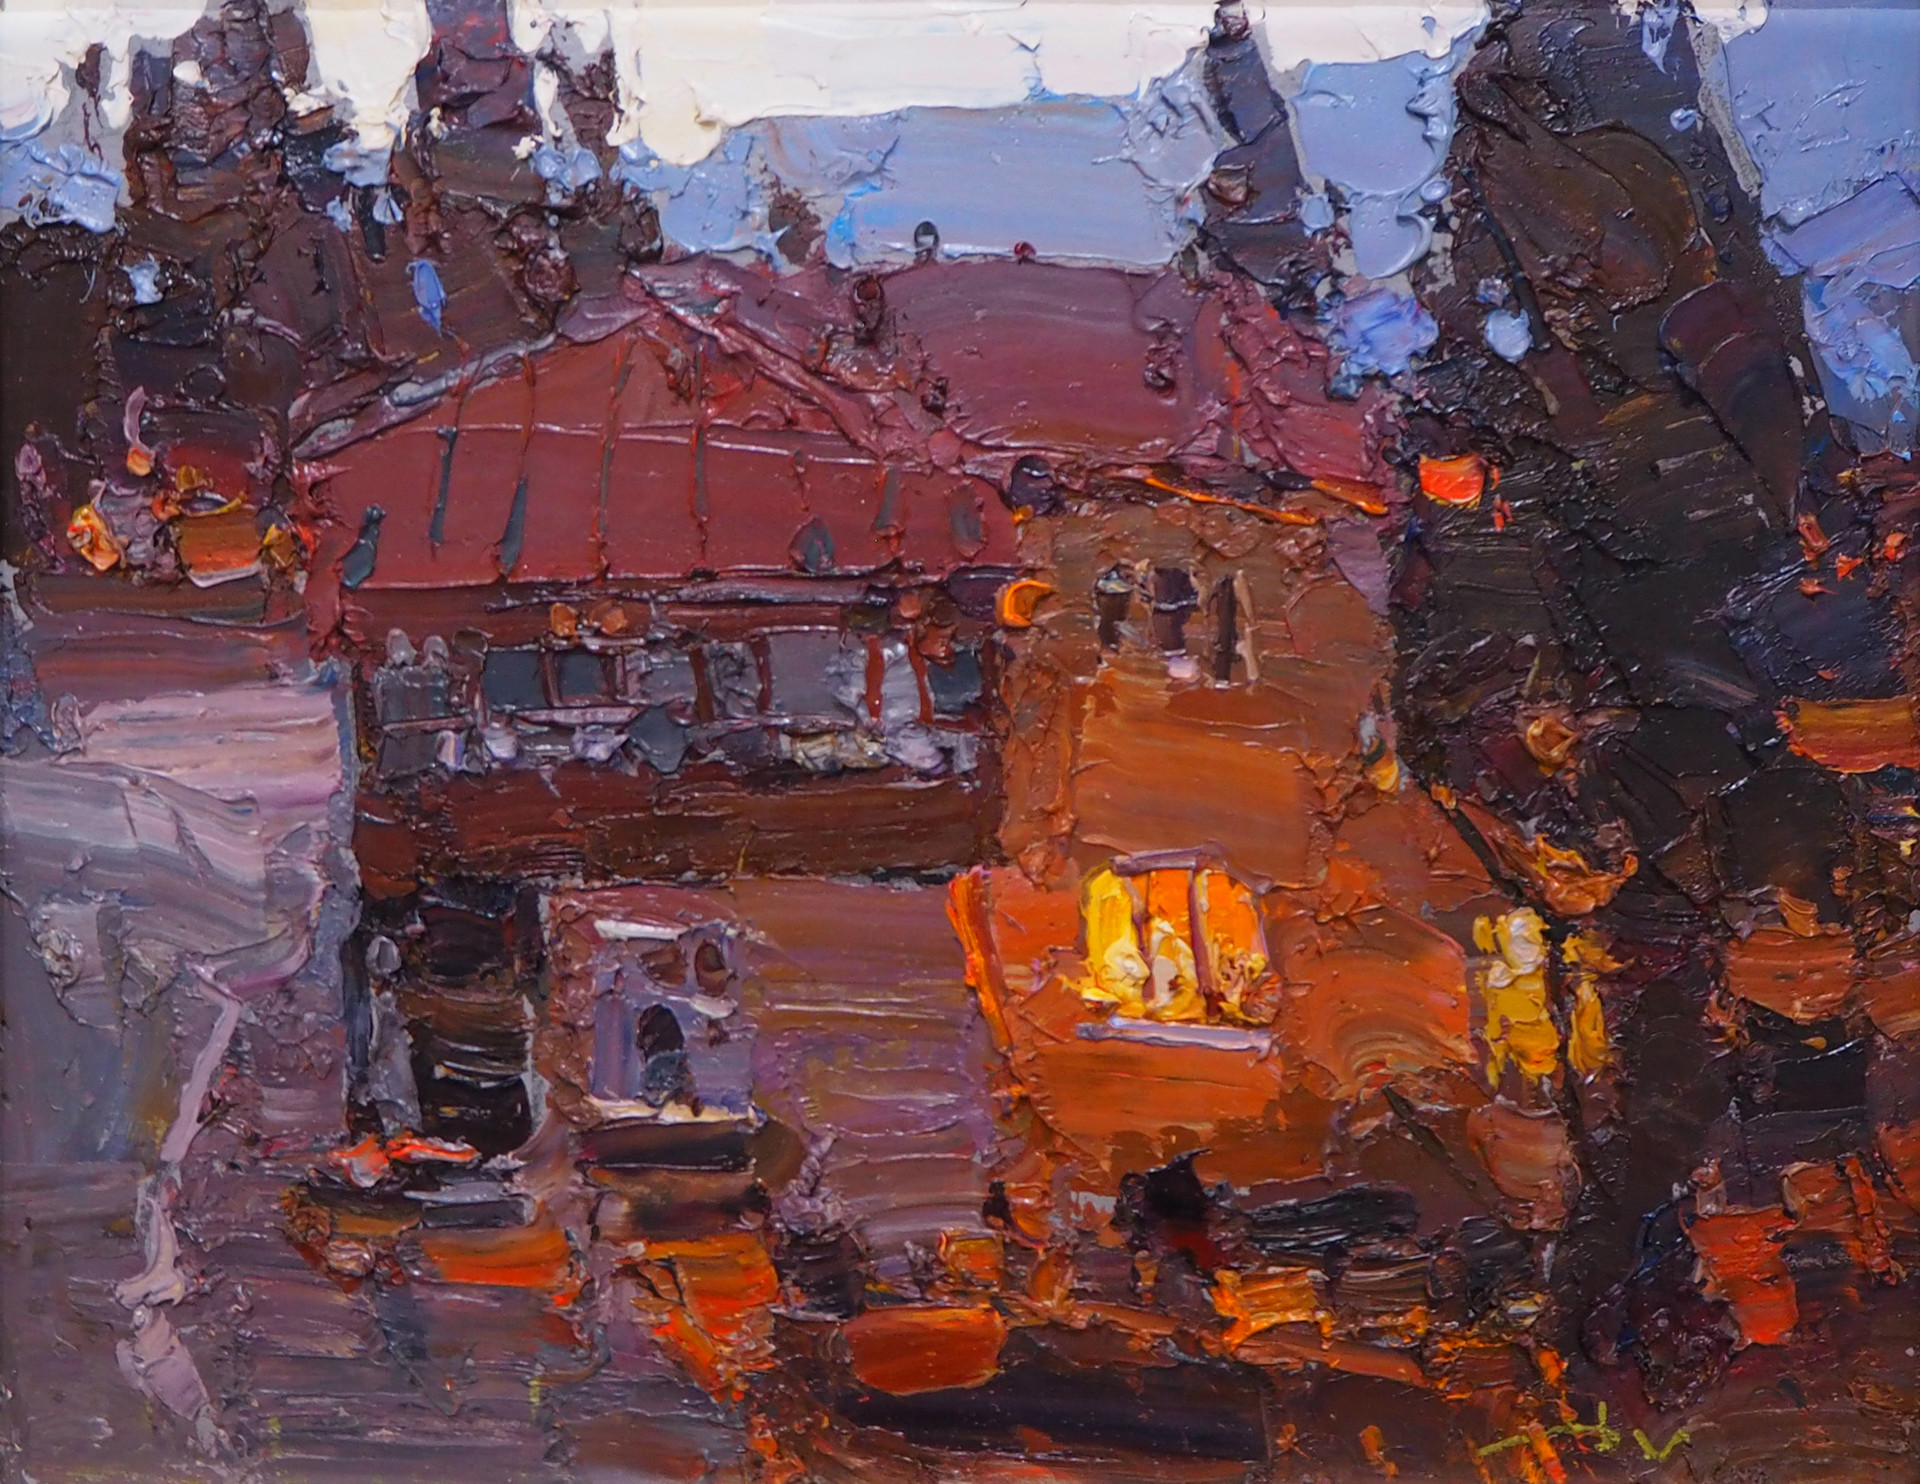 "Evening II" original oil painting by Daniil Volkov